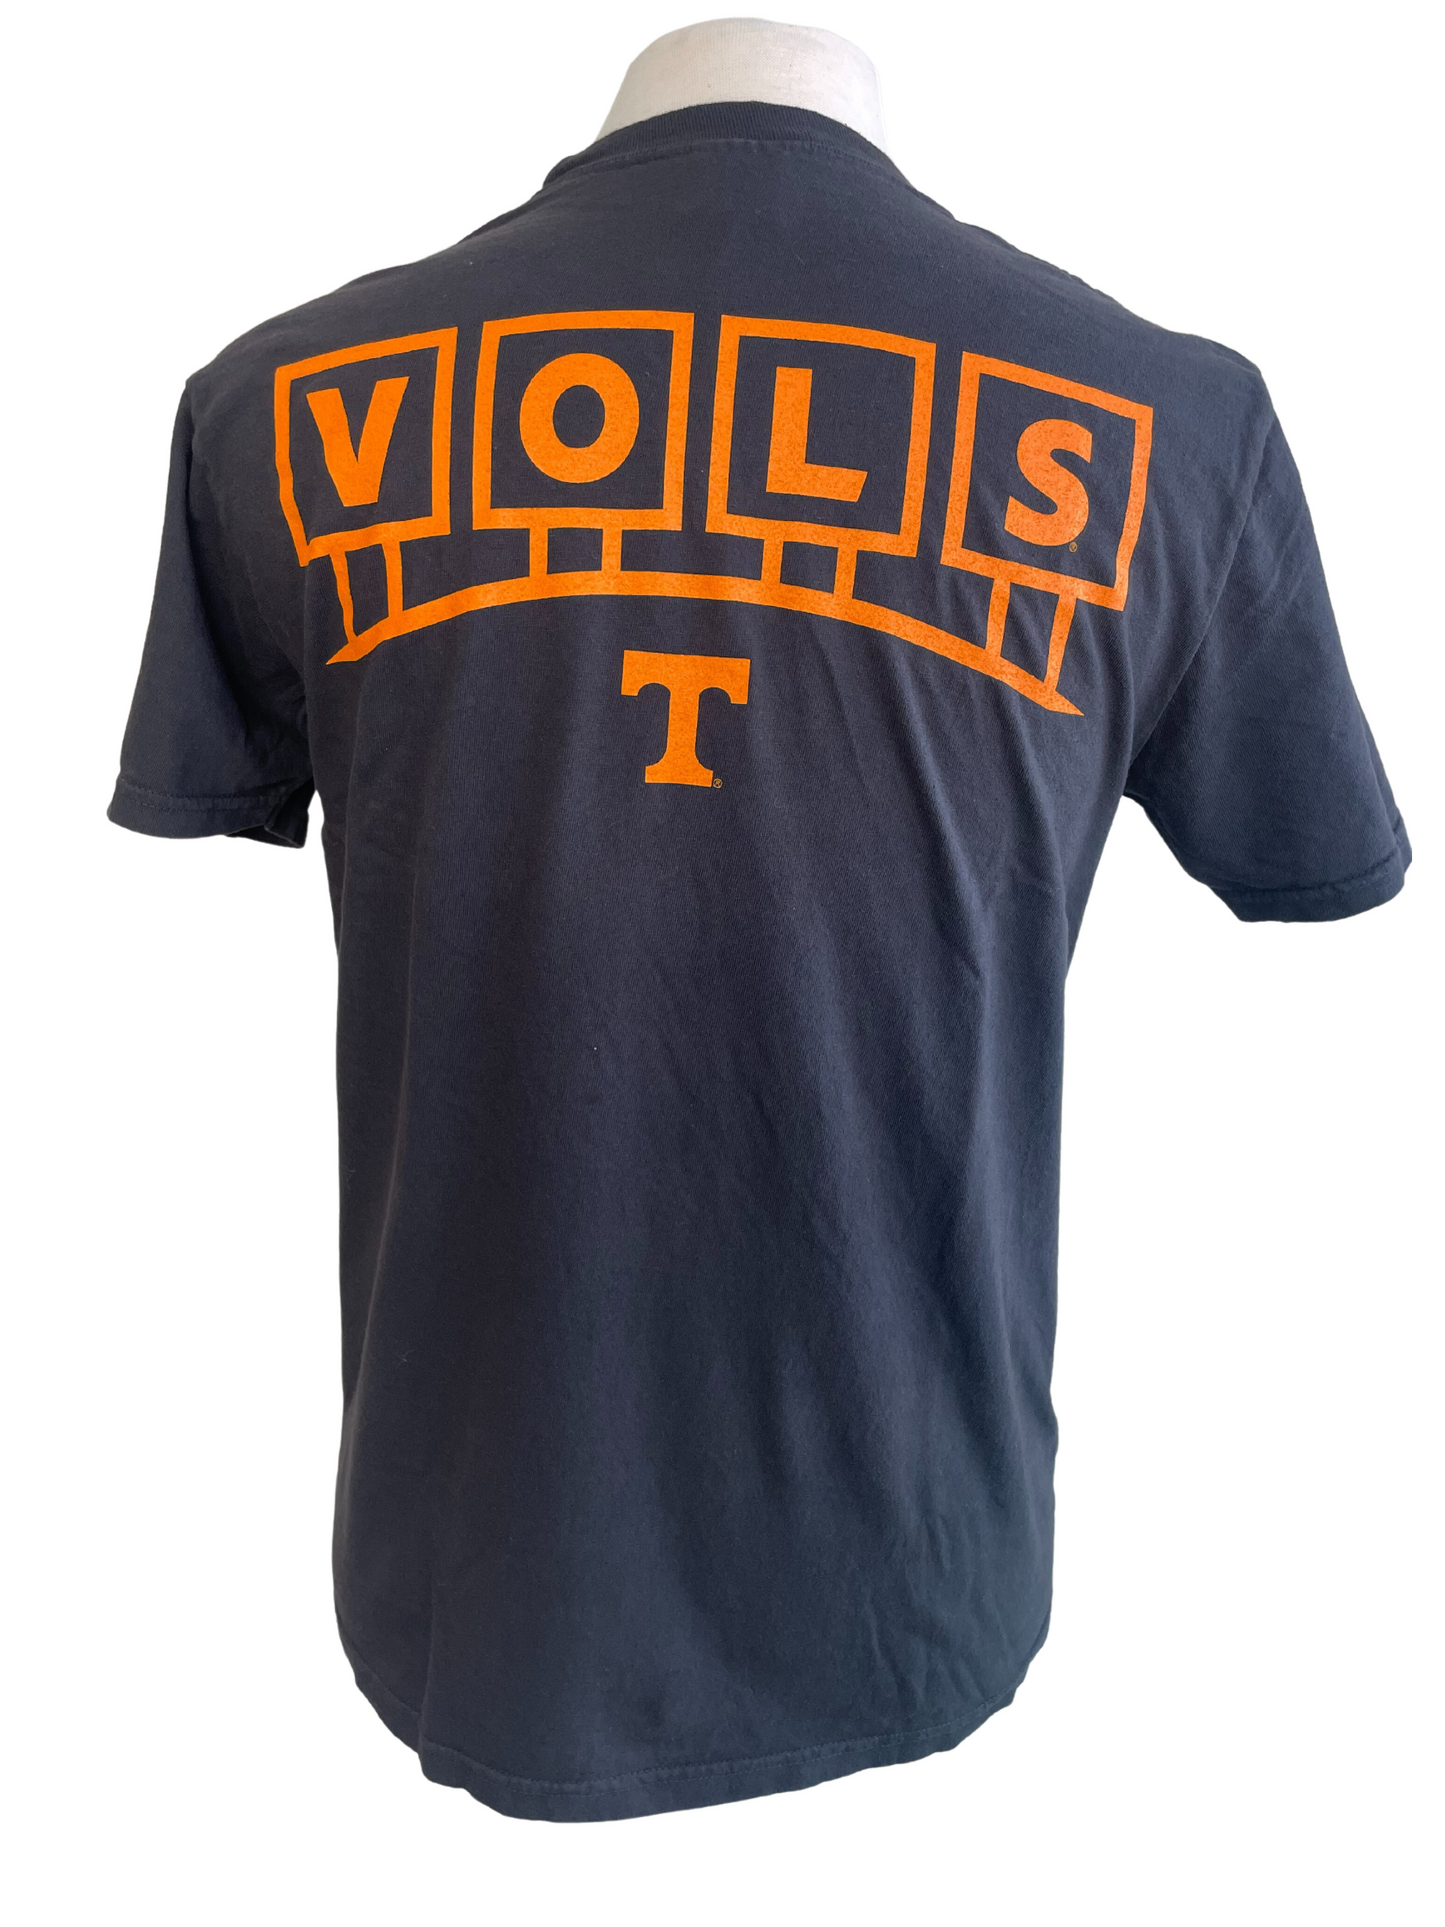 VOLS Stadium T-Shirt